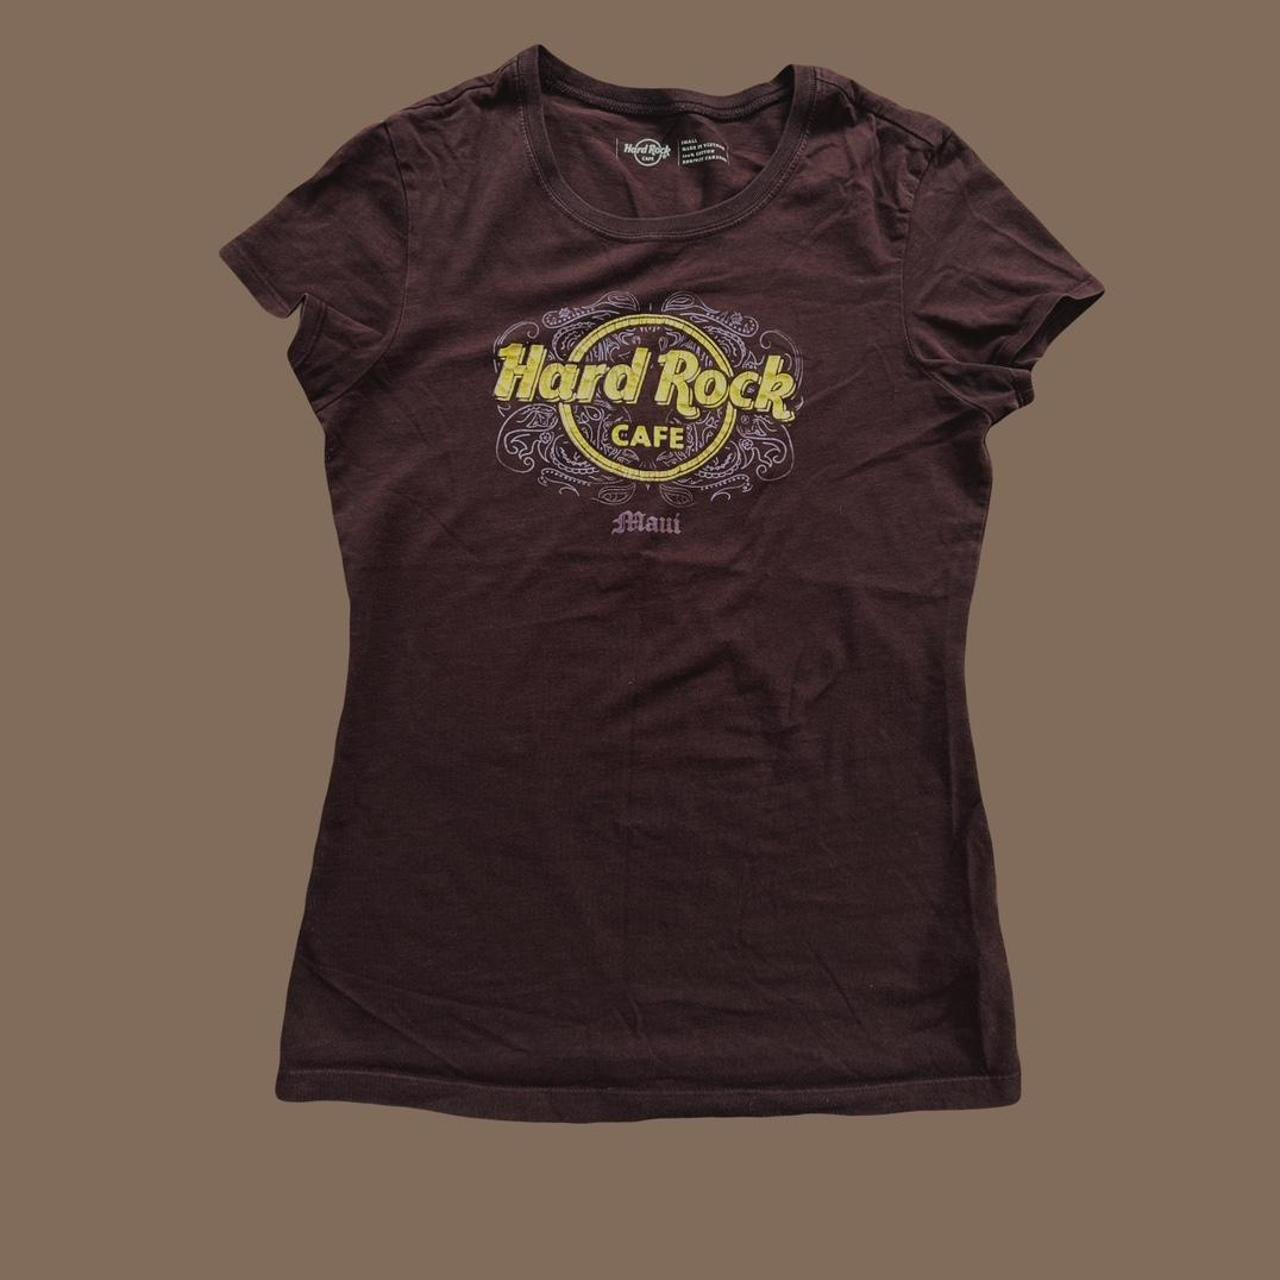 Hard Rock Cafe Women's Brown T-shirt (2)